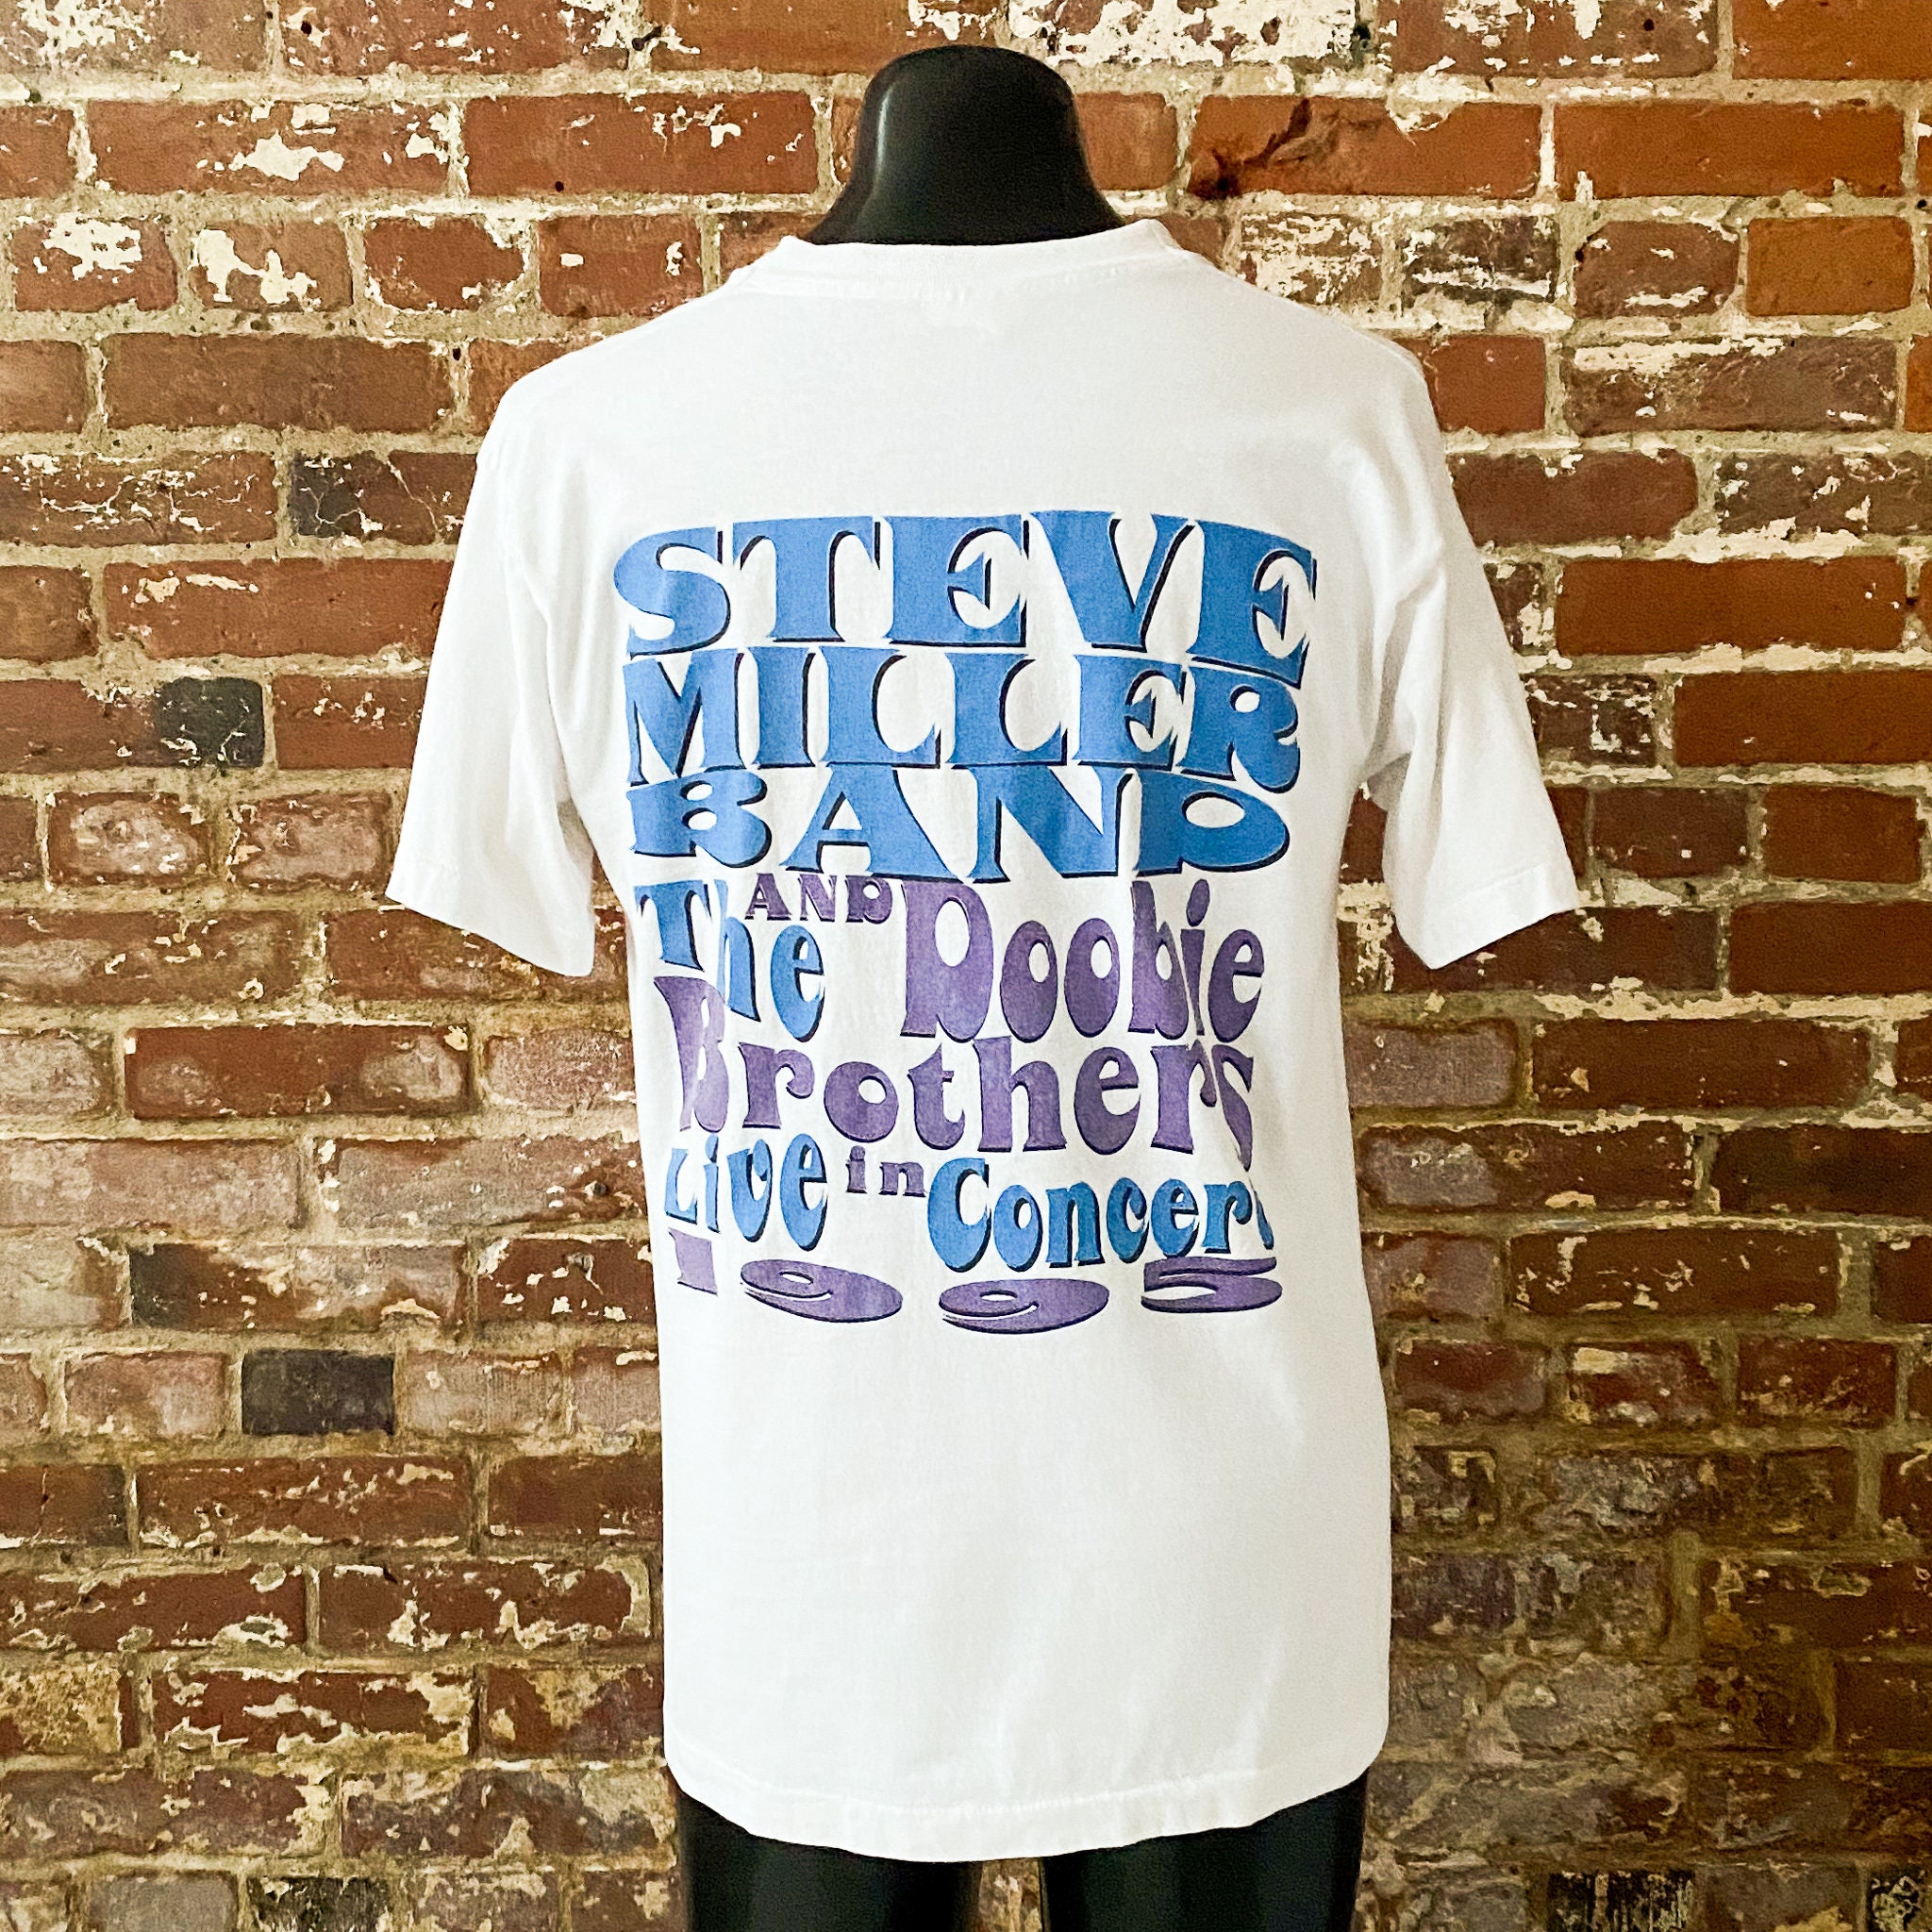 90s Steve Miller Summer Tour T-Shirt. Vintage 1995 Steve Miller